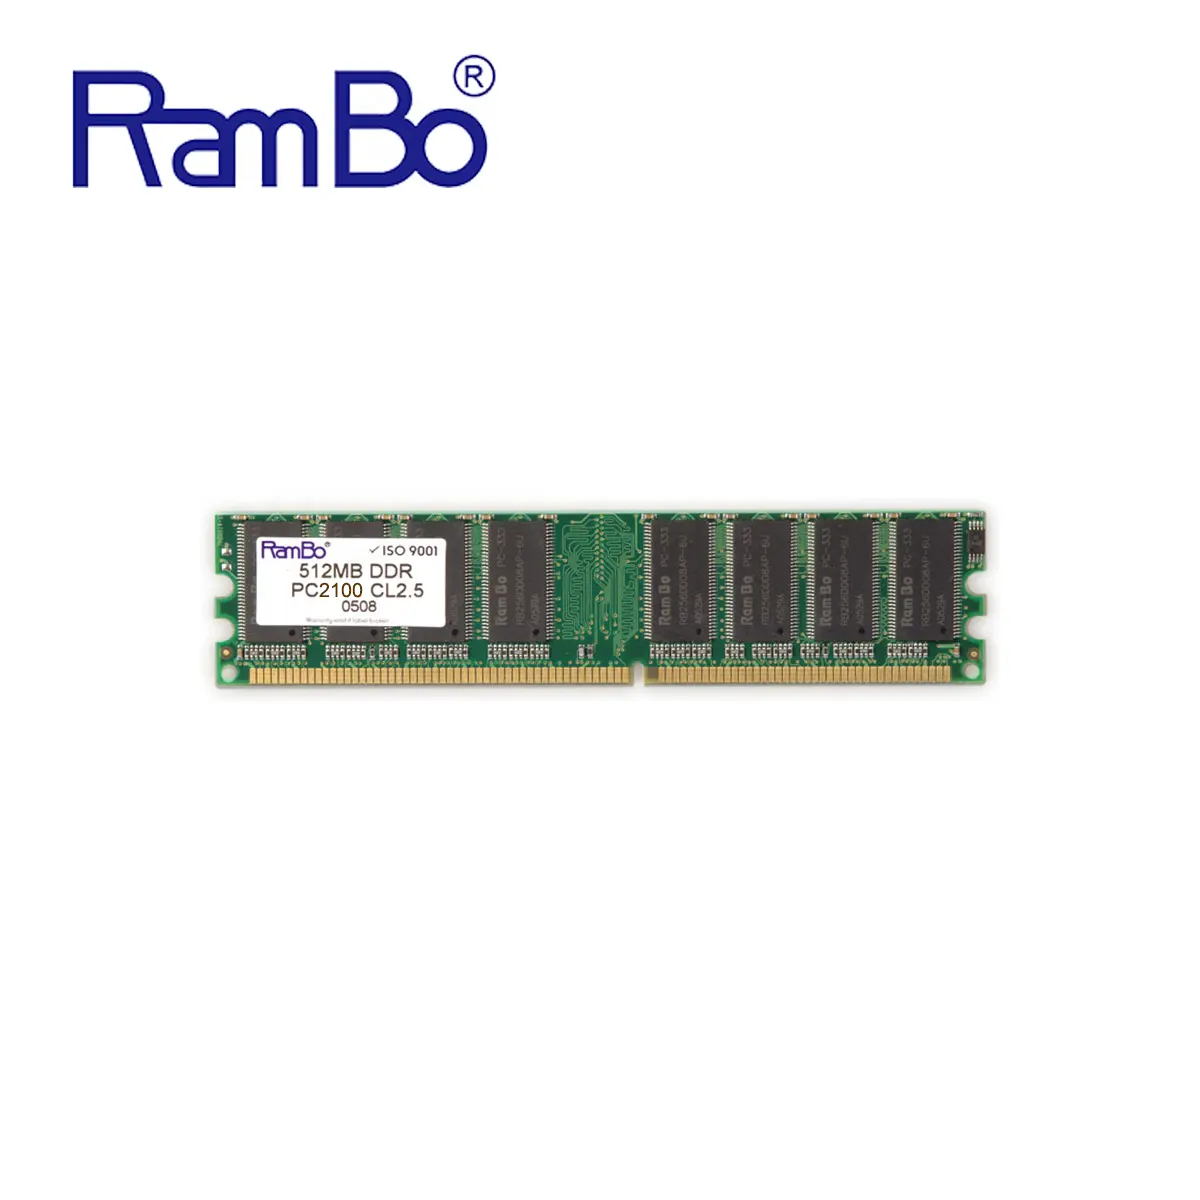 Rambo Geheugen Modules Lange Dimm Ddr 266Mhz PC2100 CL2.5 8Chips 512Mb Desktop Ram